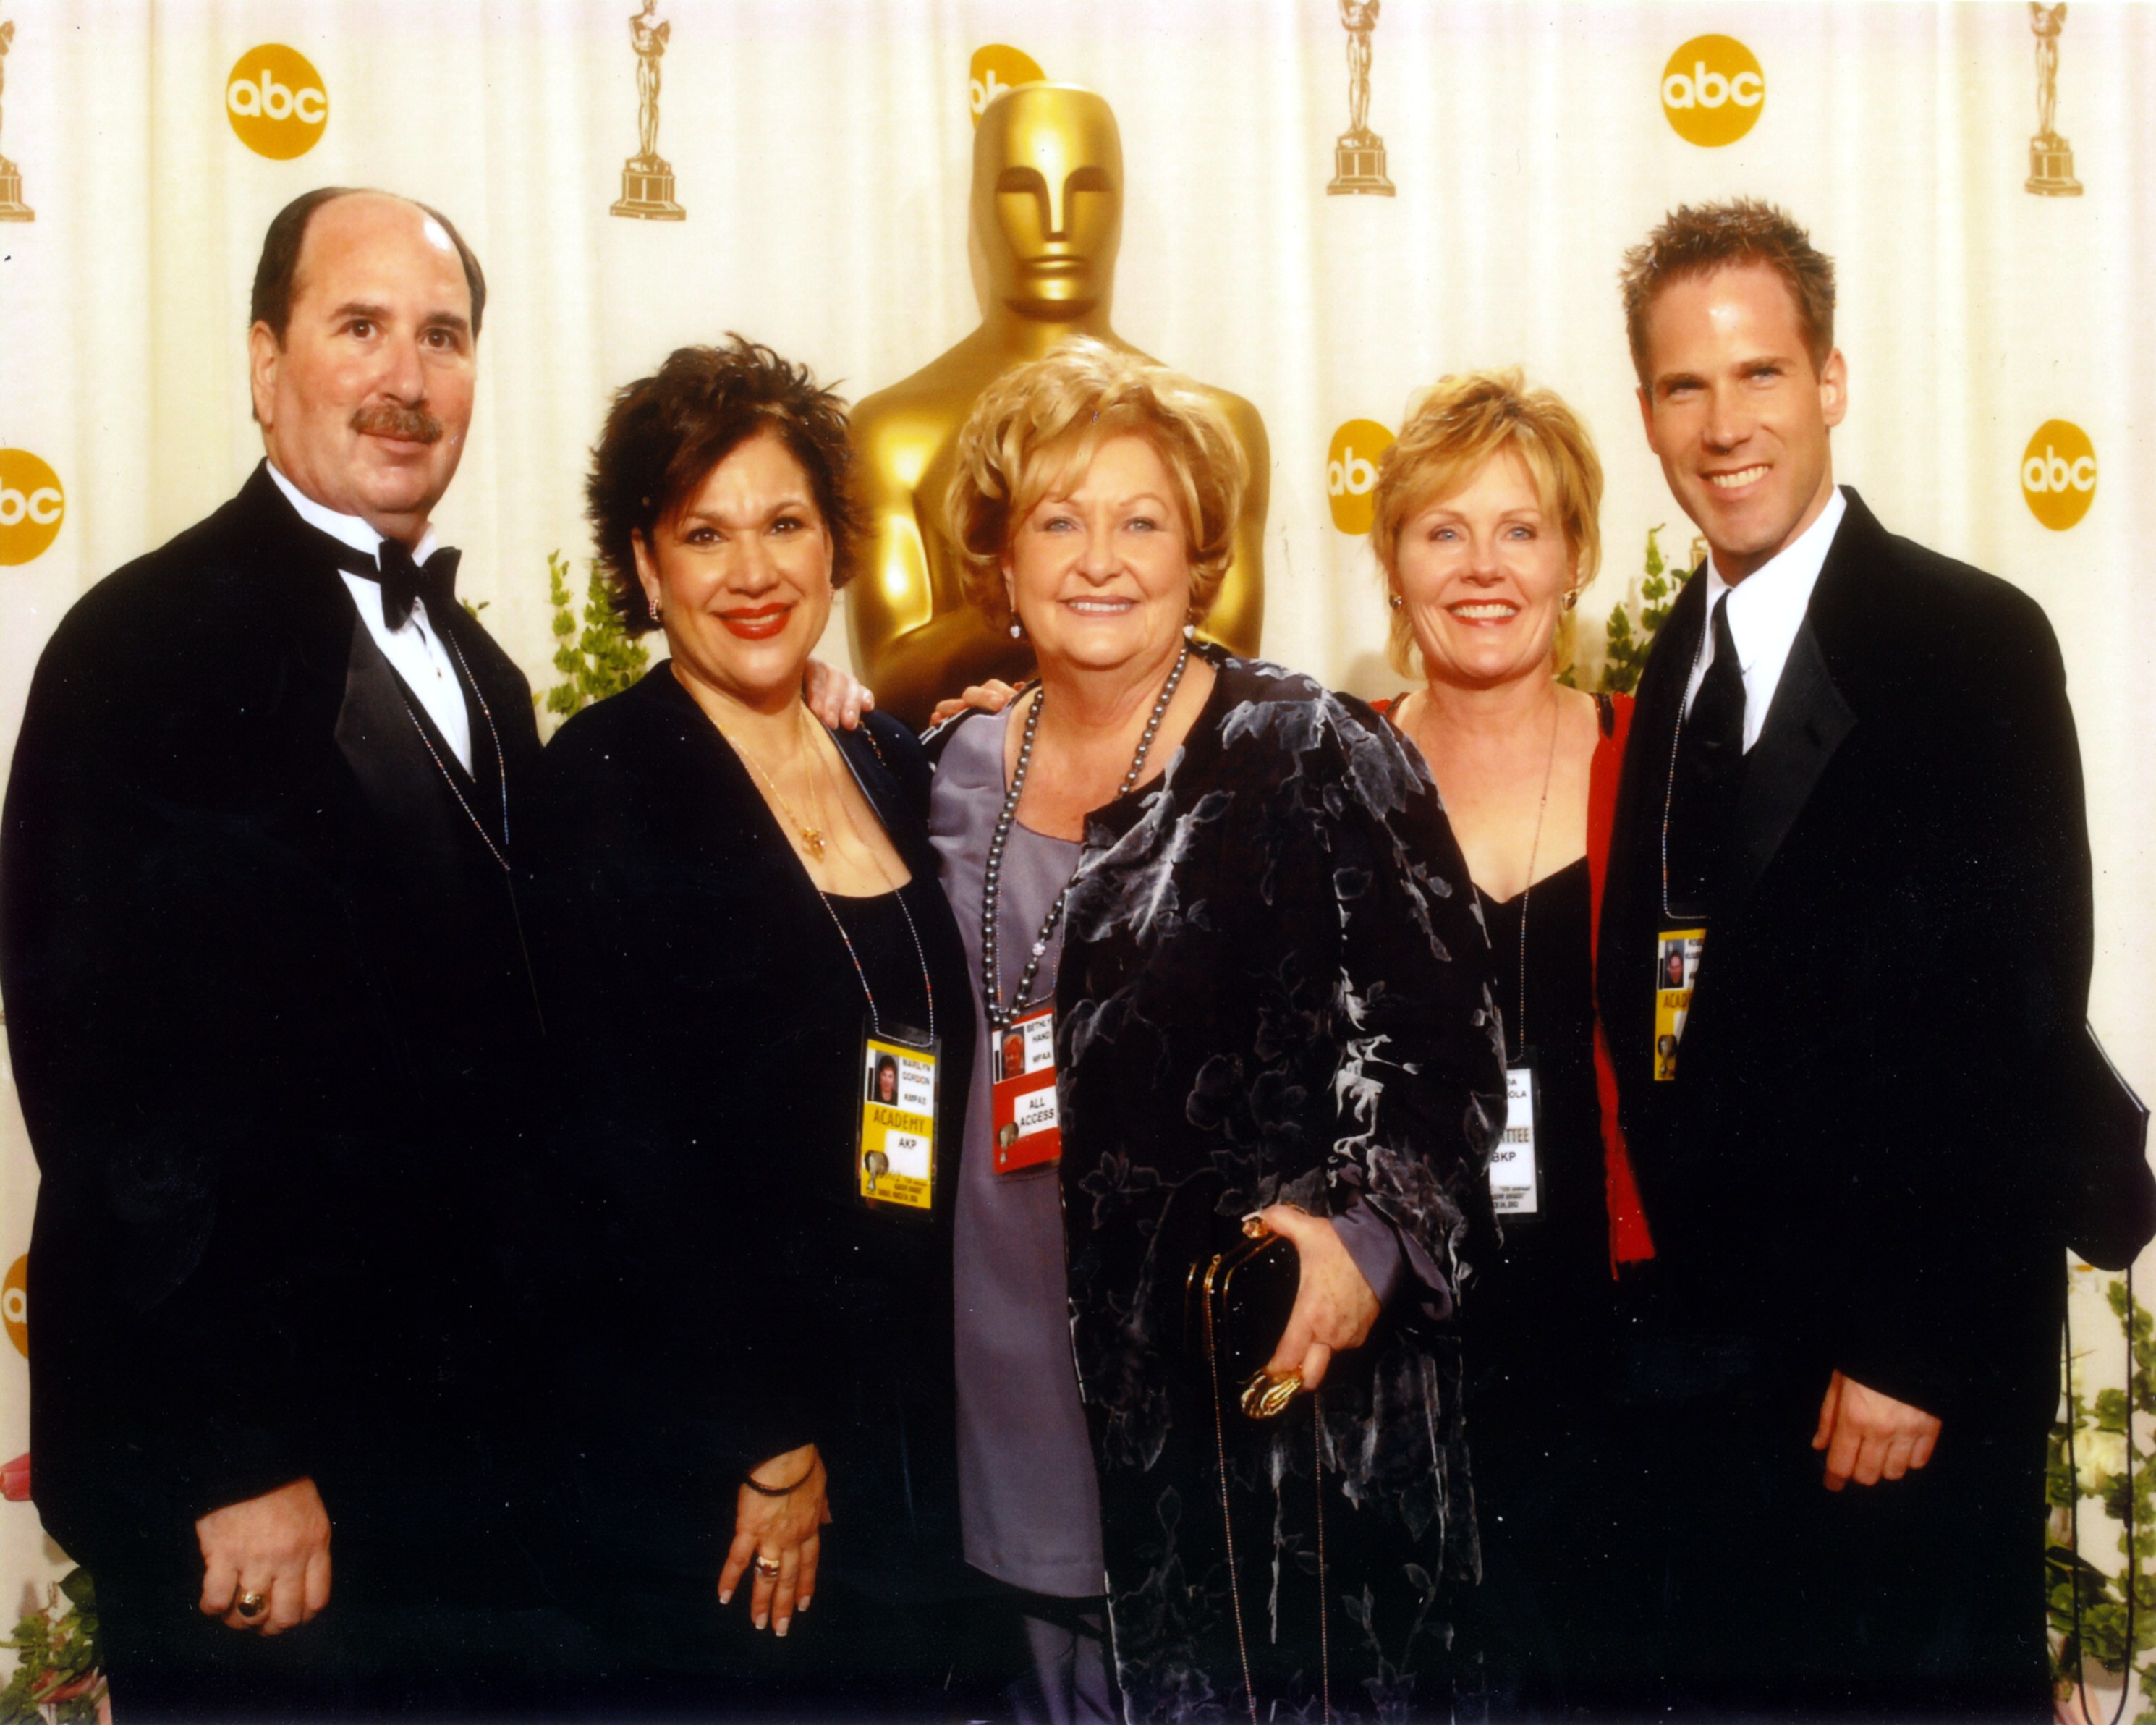 Backstage at The Academy Awards (David Gordon, Marily Gordon, Bethlyn Hand, Linda Mangola, Robert Kusserow)